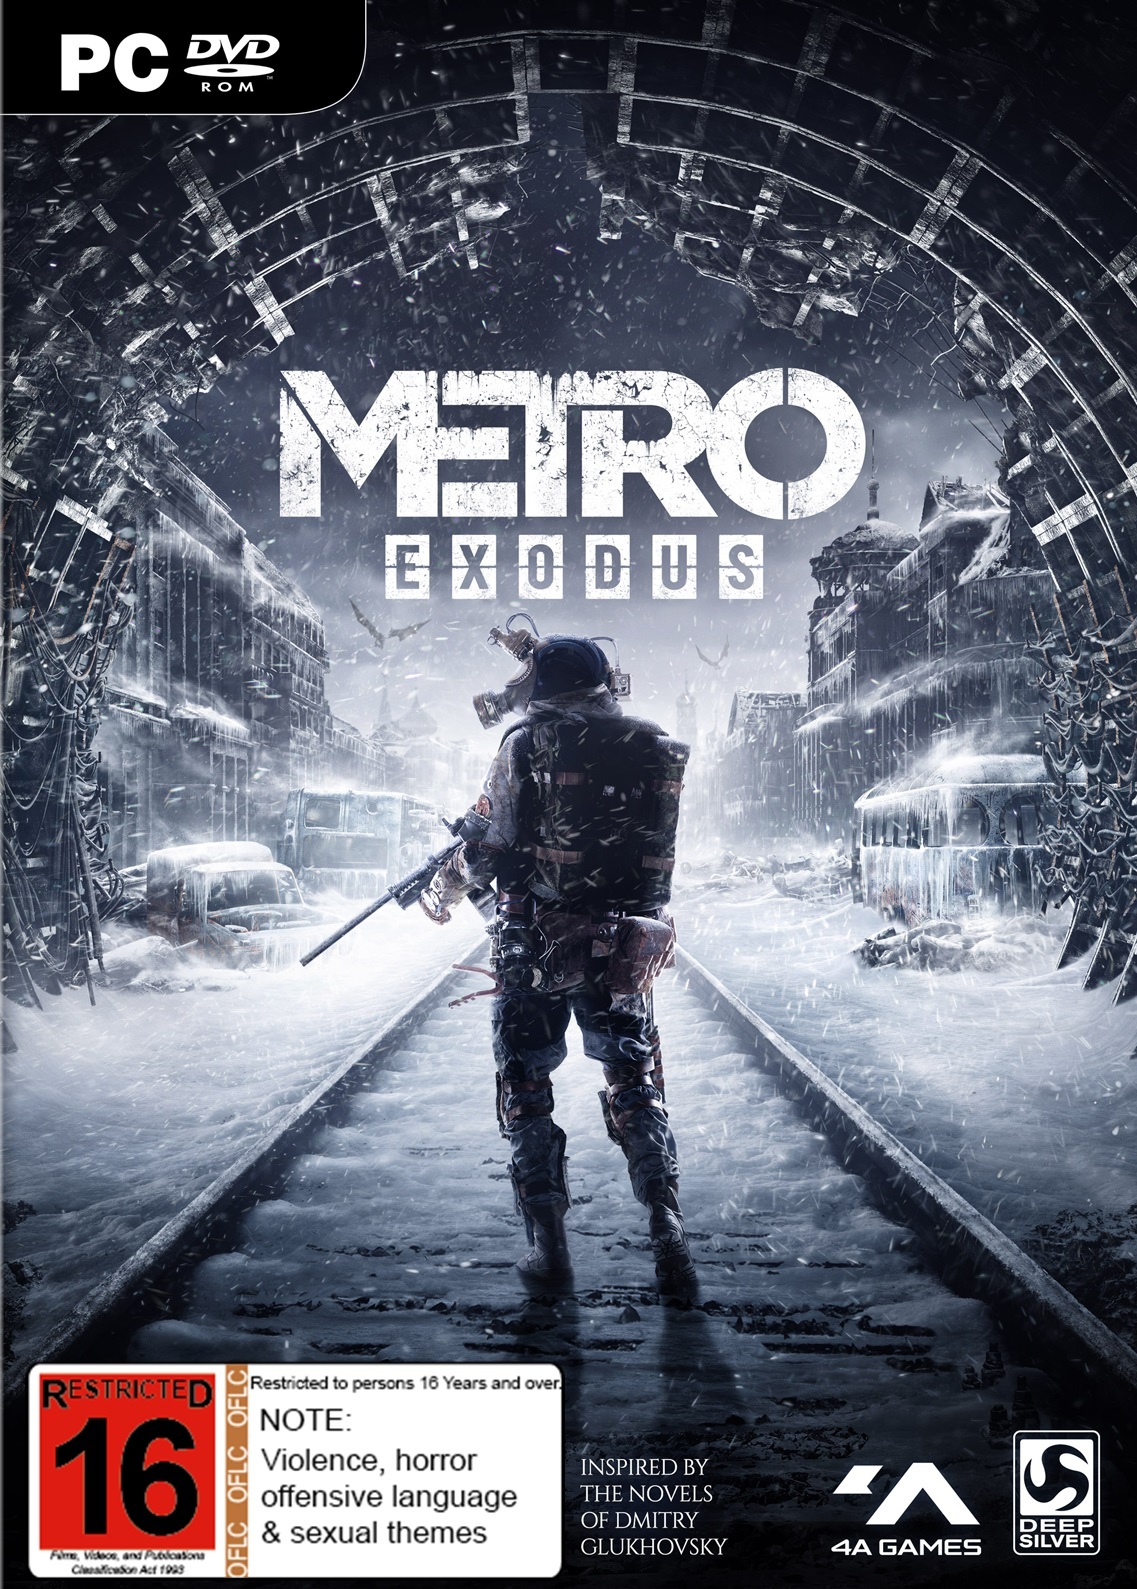 metro exodus pc enhanced edition